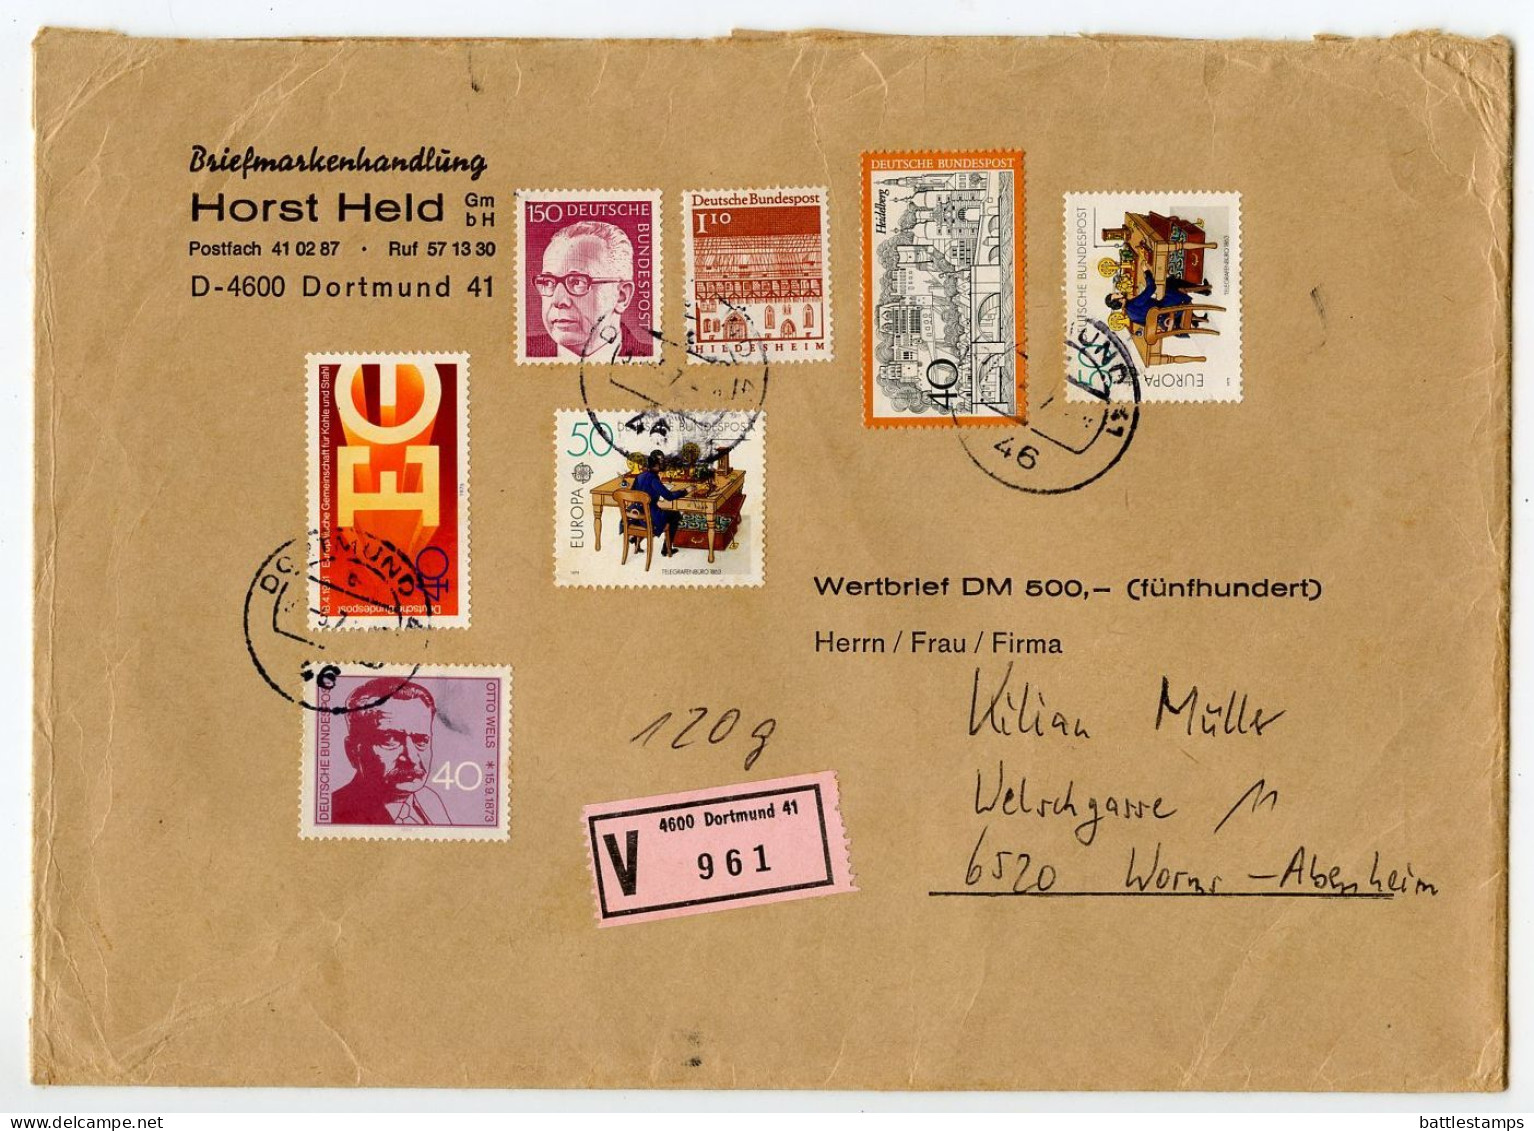 Germany, West 1979 Insured V-Label Cover; Dortmund To Worms-Abenheim; Mix Of Stamps - Briefe U. Dokumente